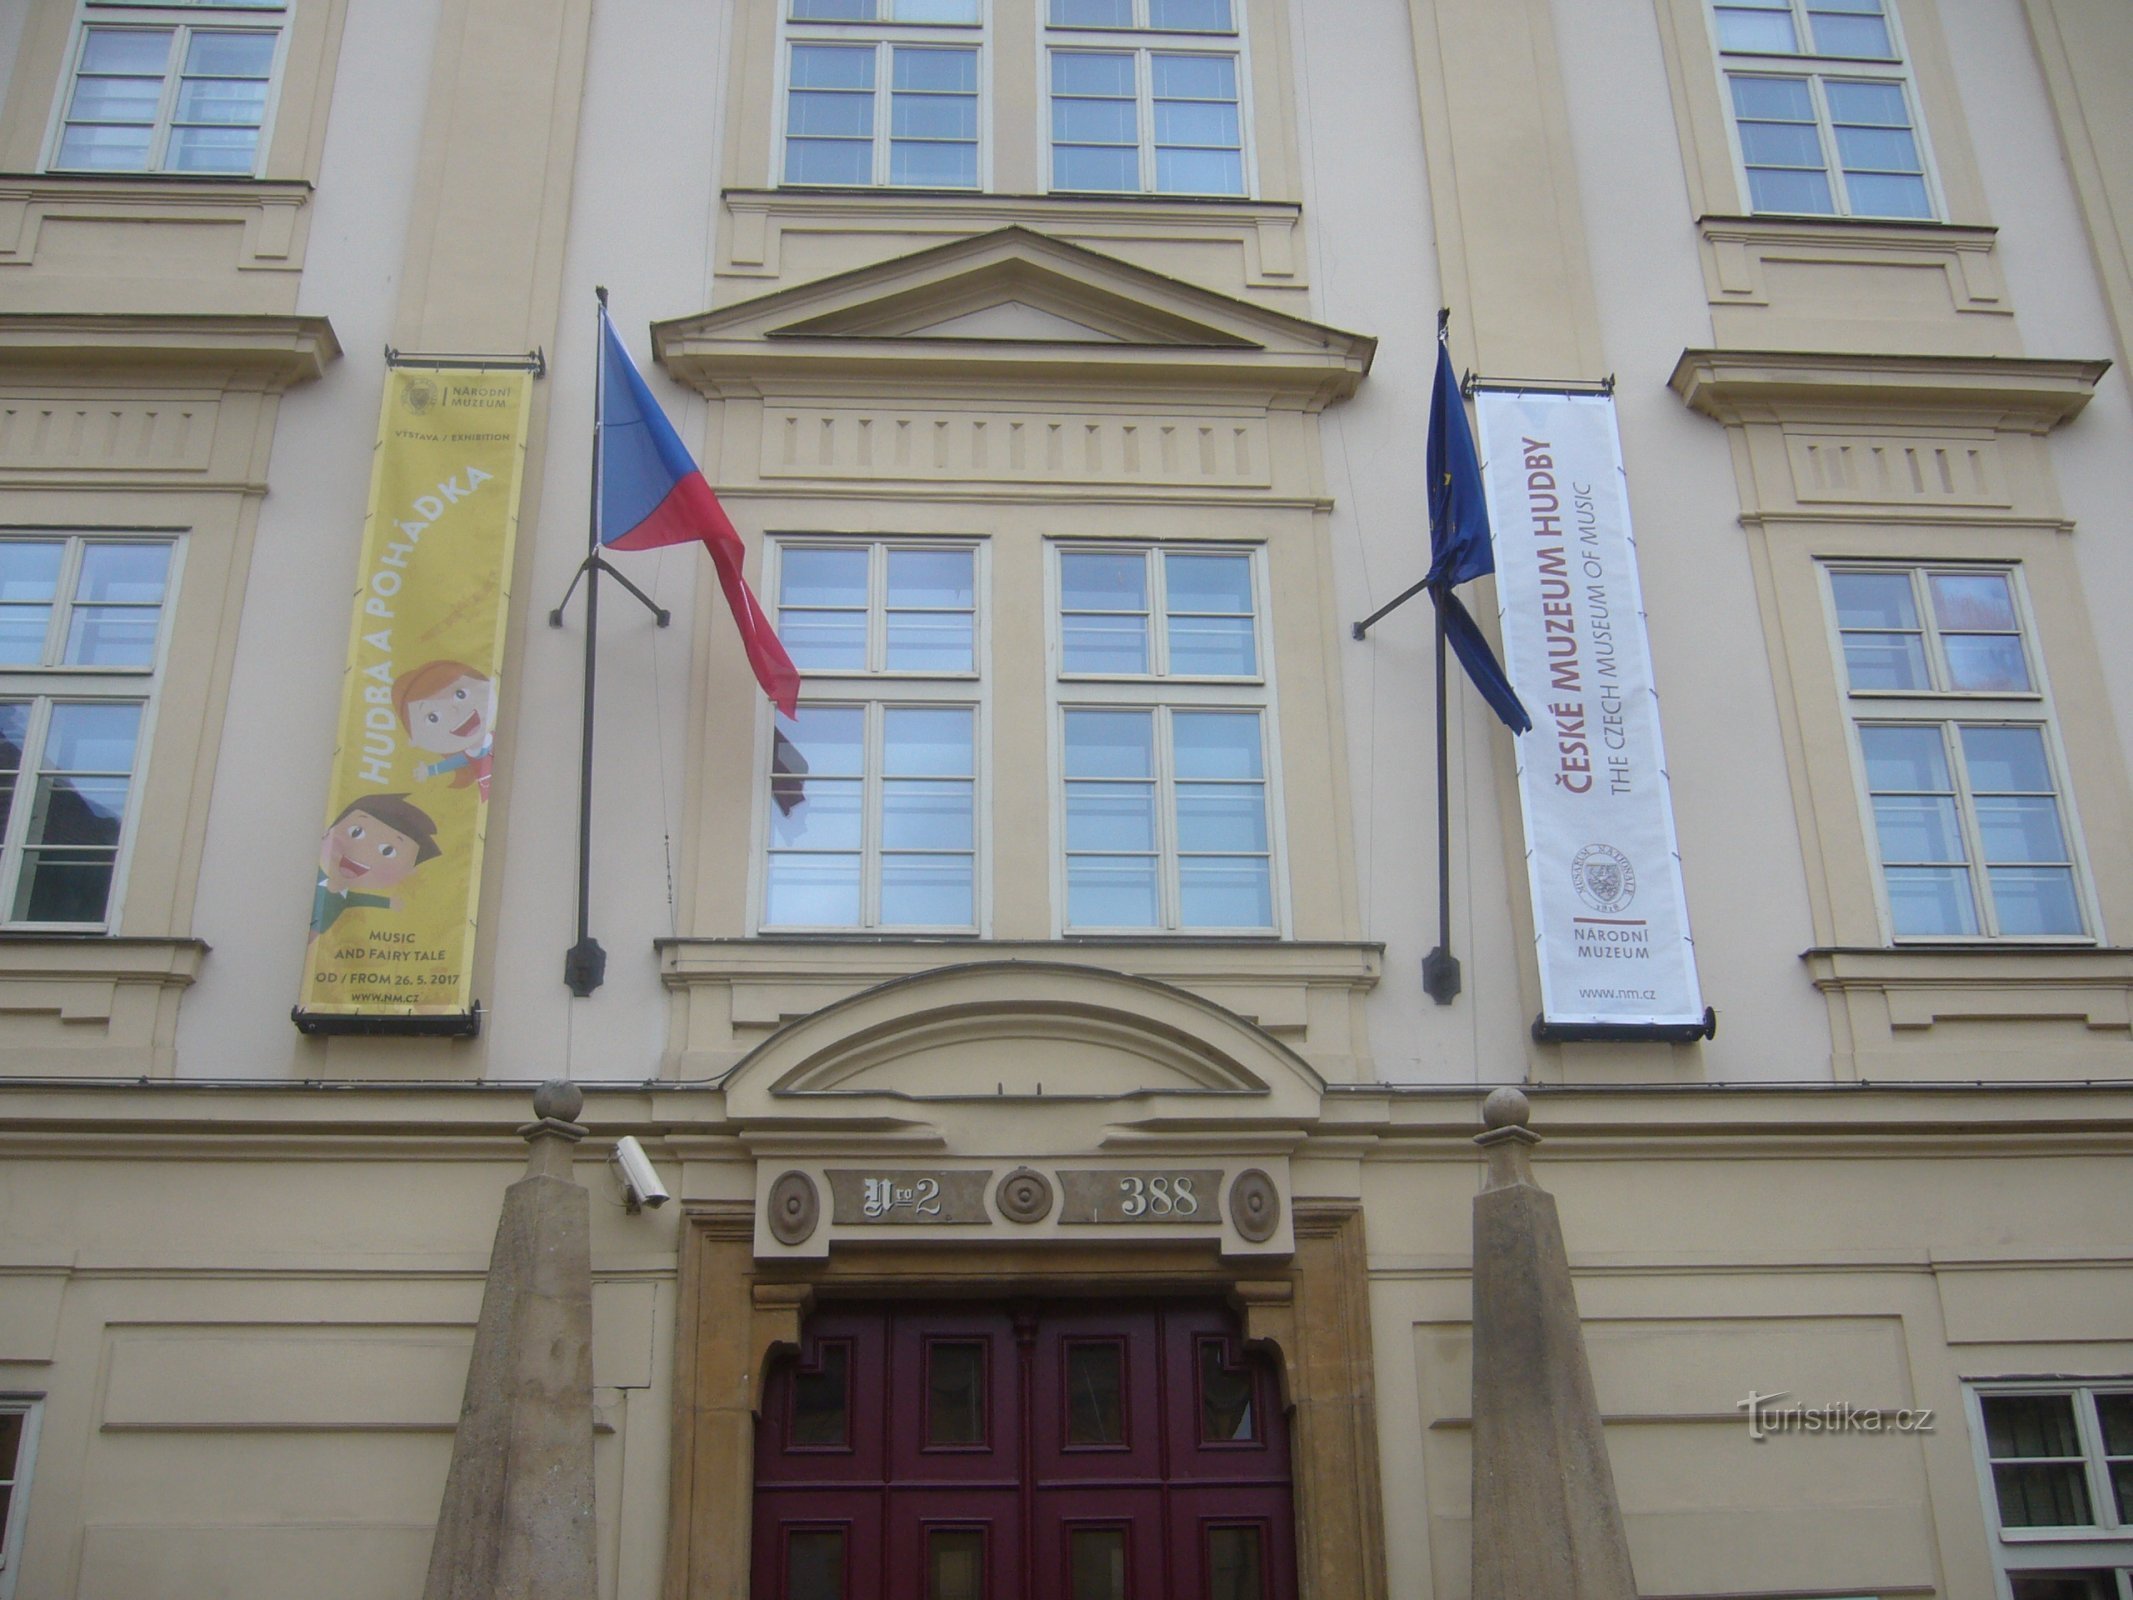 Tjekkisk Musikmuseum